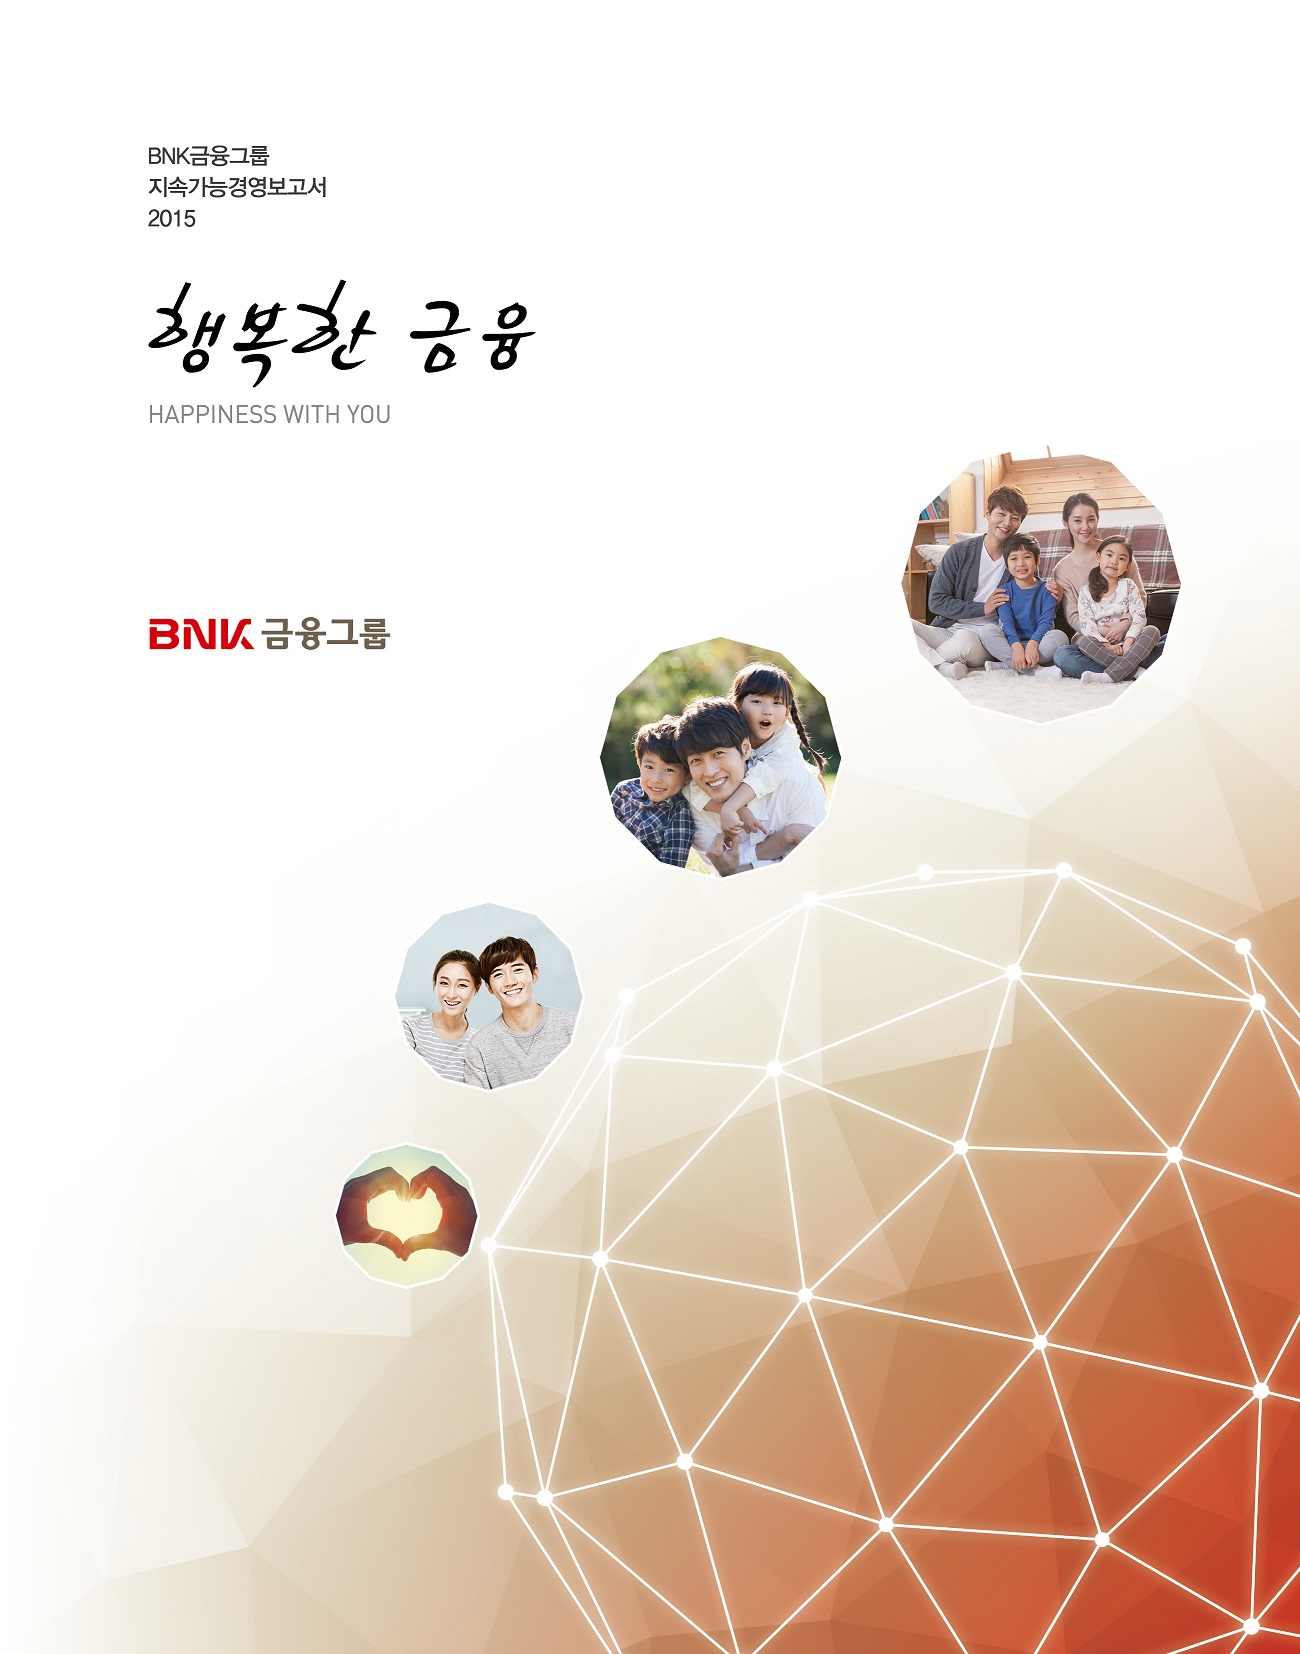 BNK금융그룹 지속가능경영보고서 2015 표지